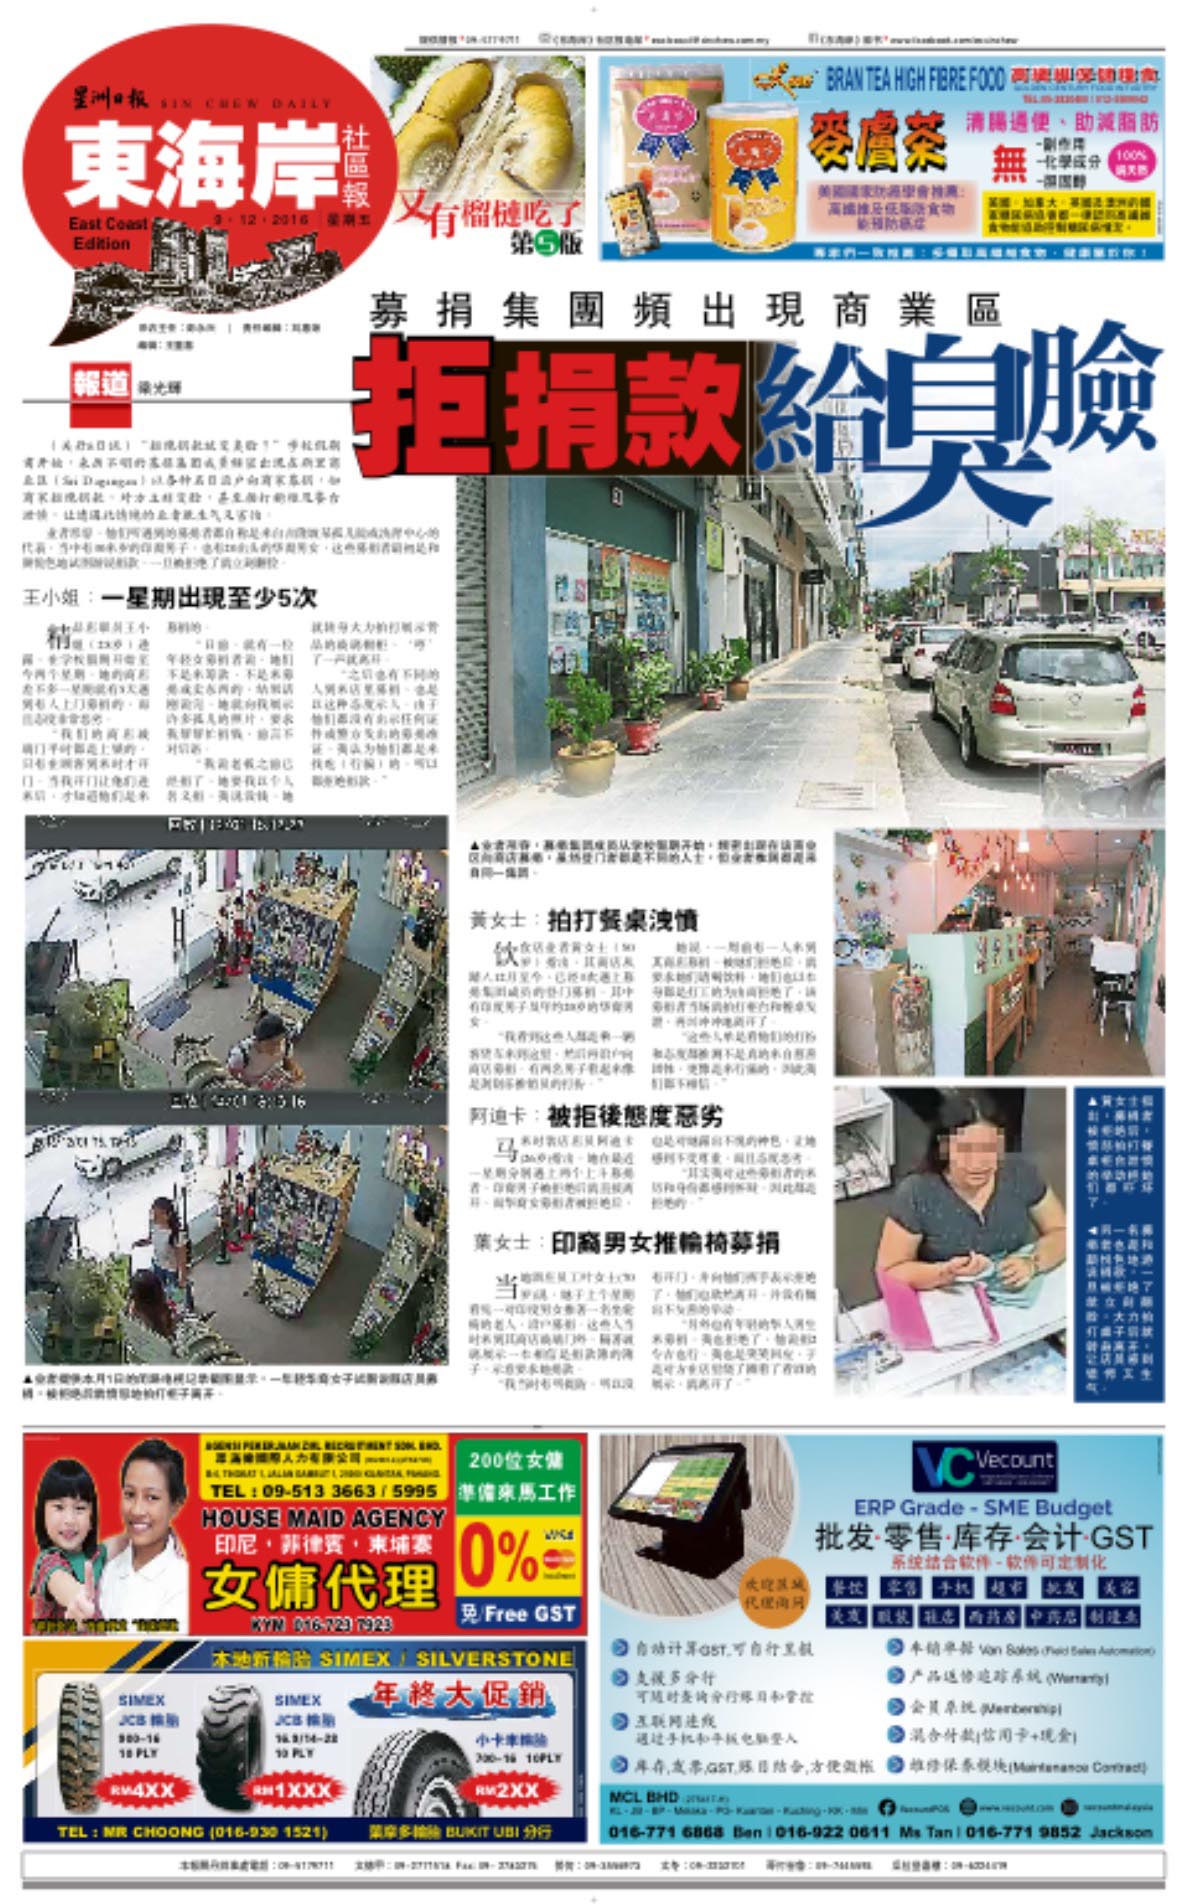 See hua daily news sarawak